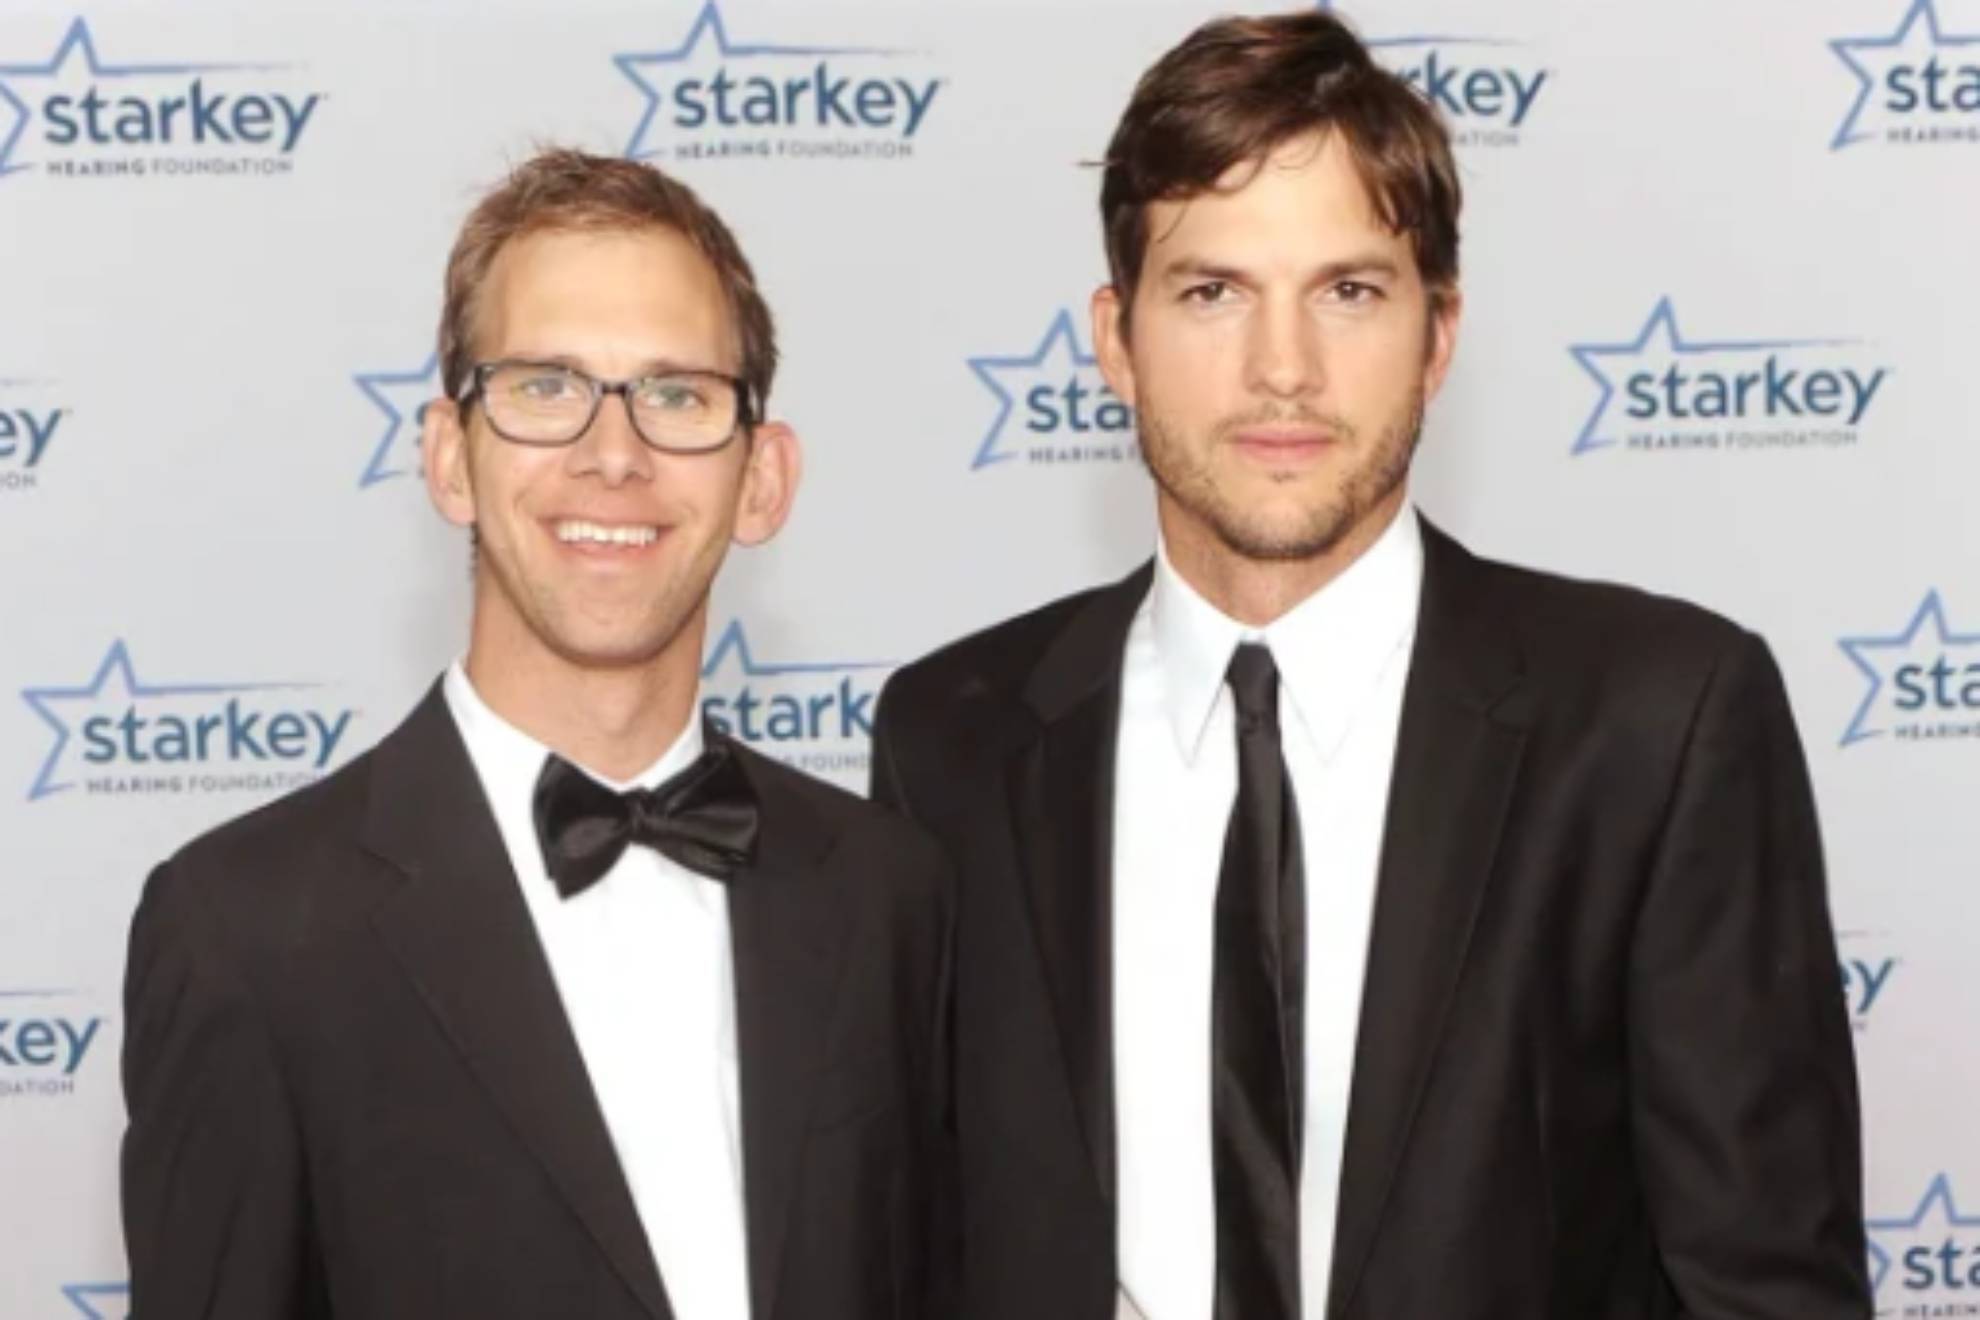 Ashton Kutcher and his twin brother